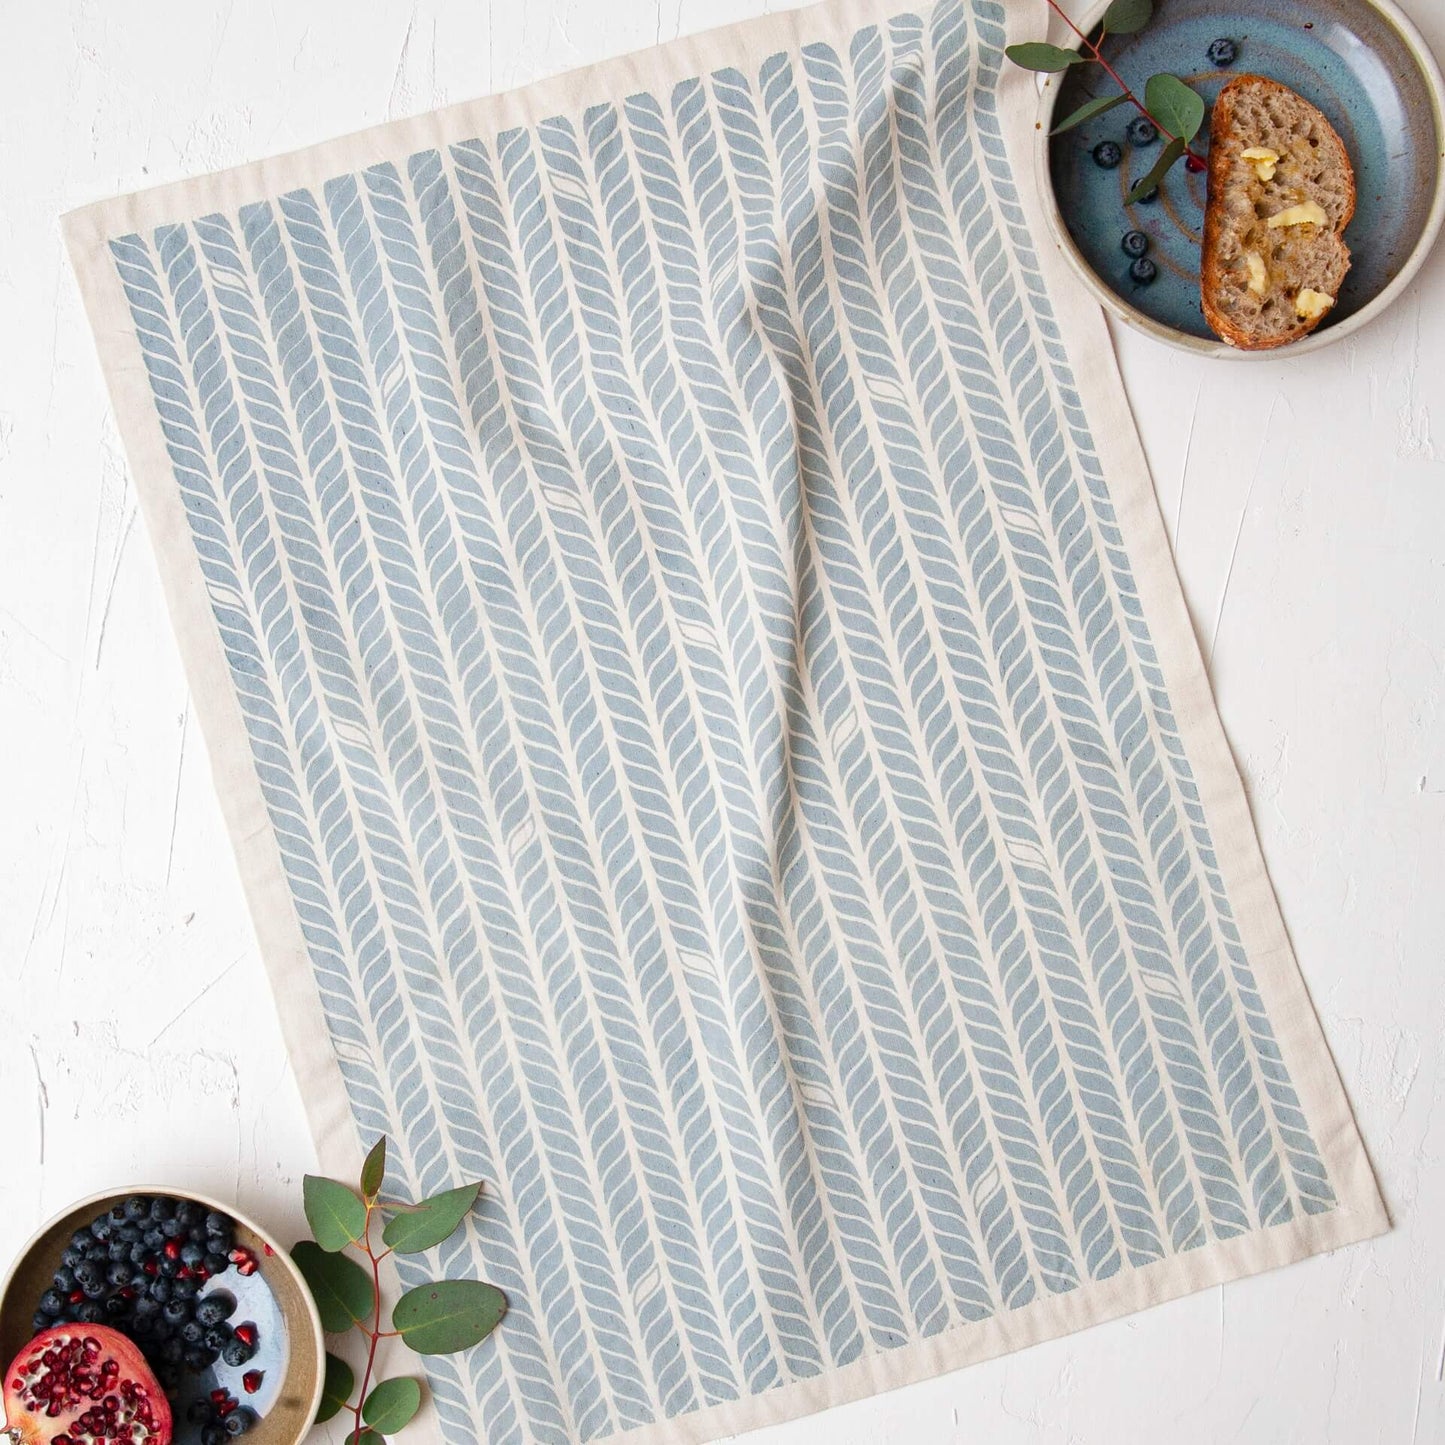 Prints By Nature Tea Towel Organic Cotton Tea Towel in 'Wheat' Print